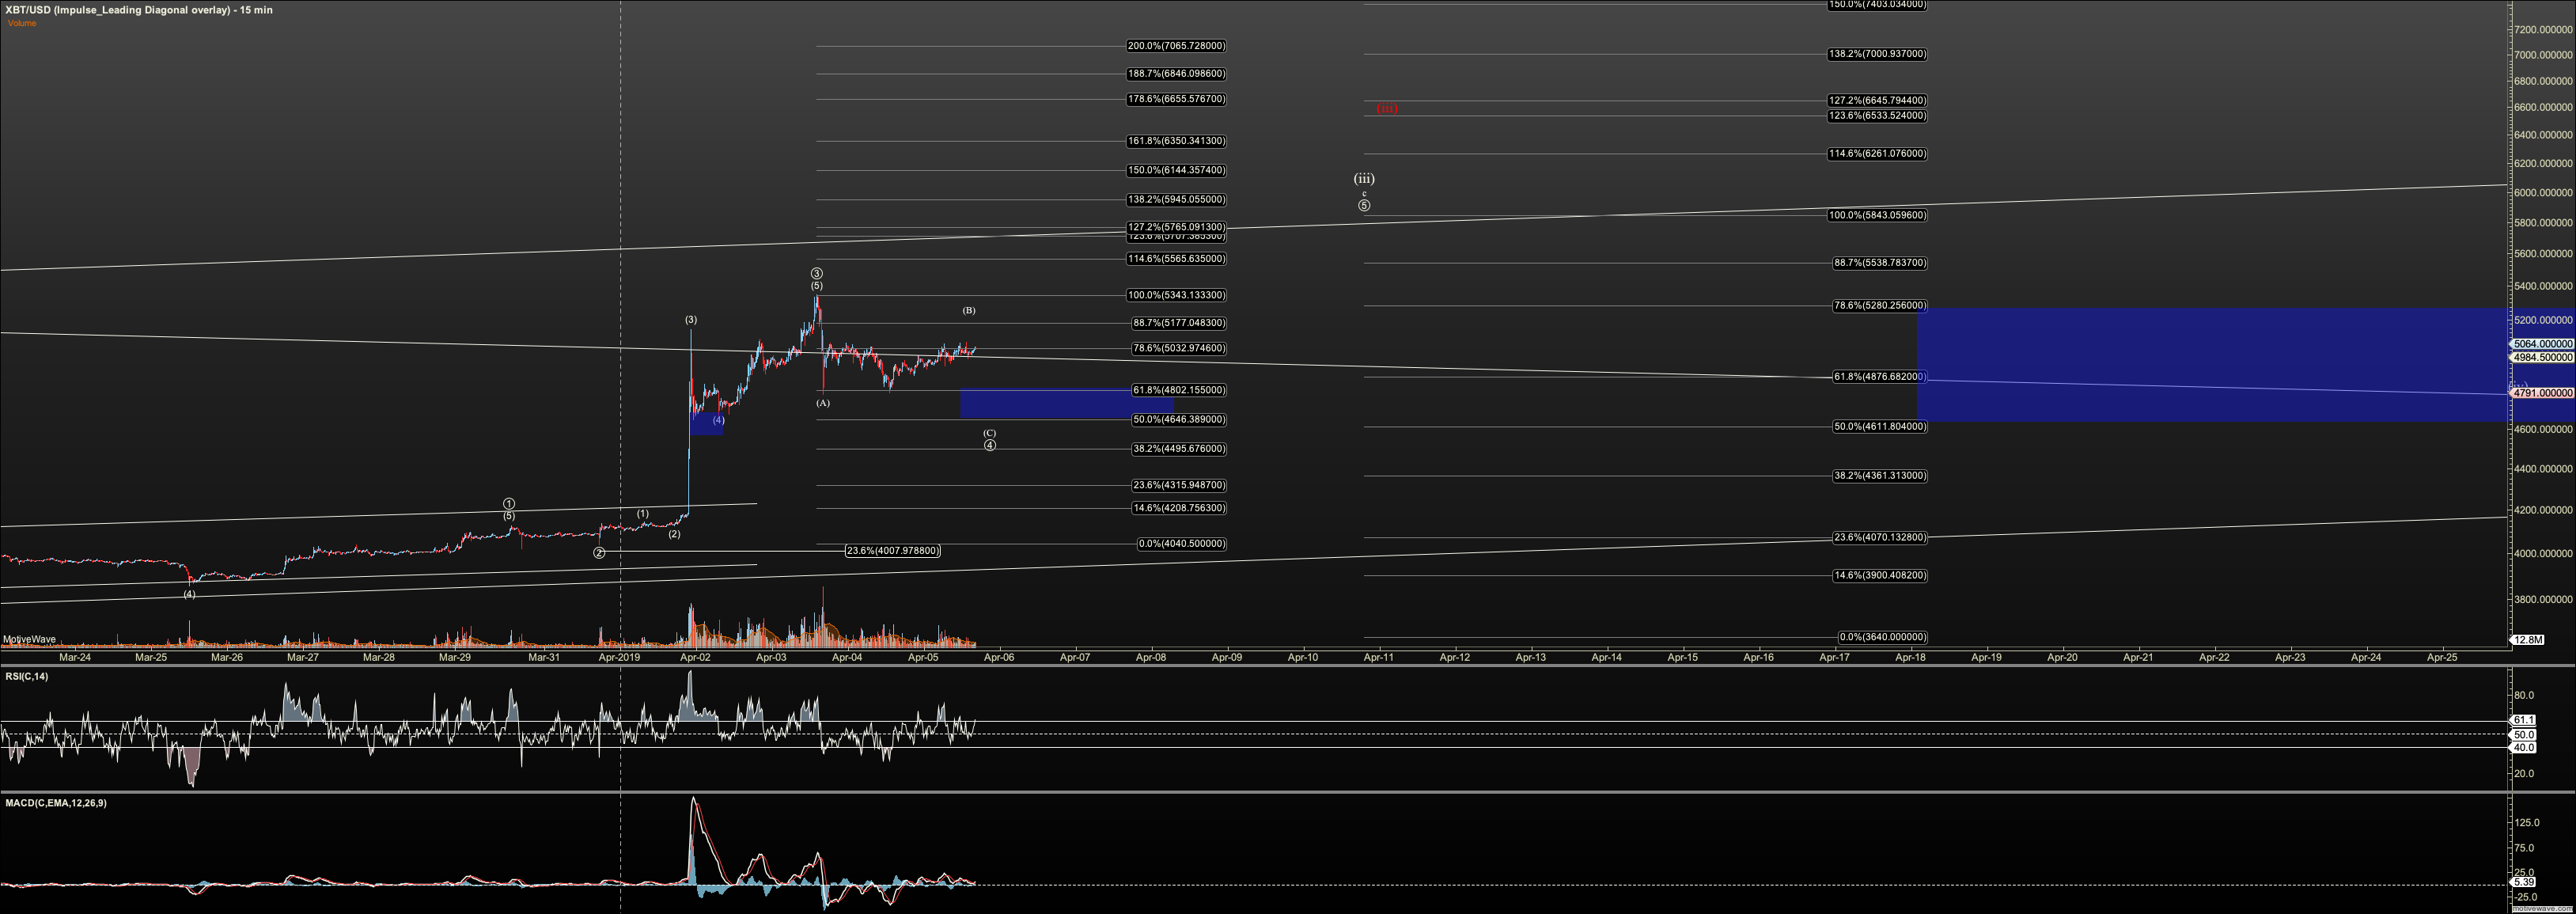 XBTUSD - Impulse Leading Diagonal overlay - Apr-05 1627 PM (15 min)